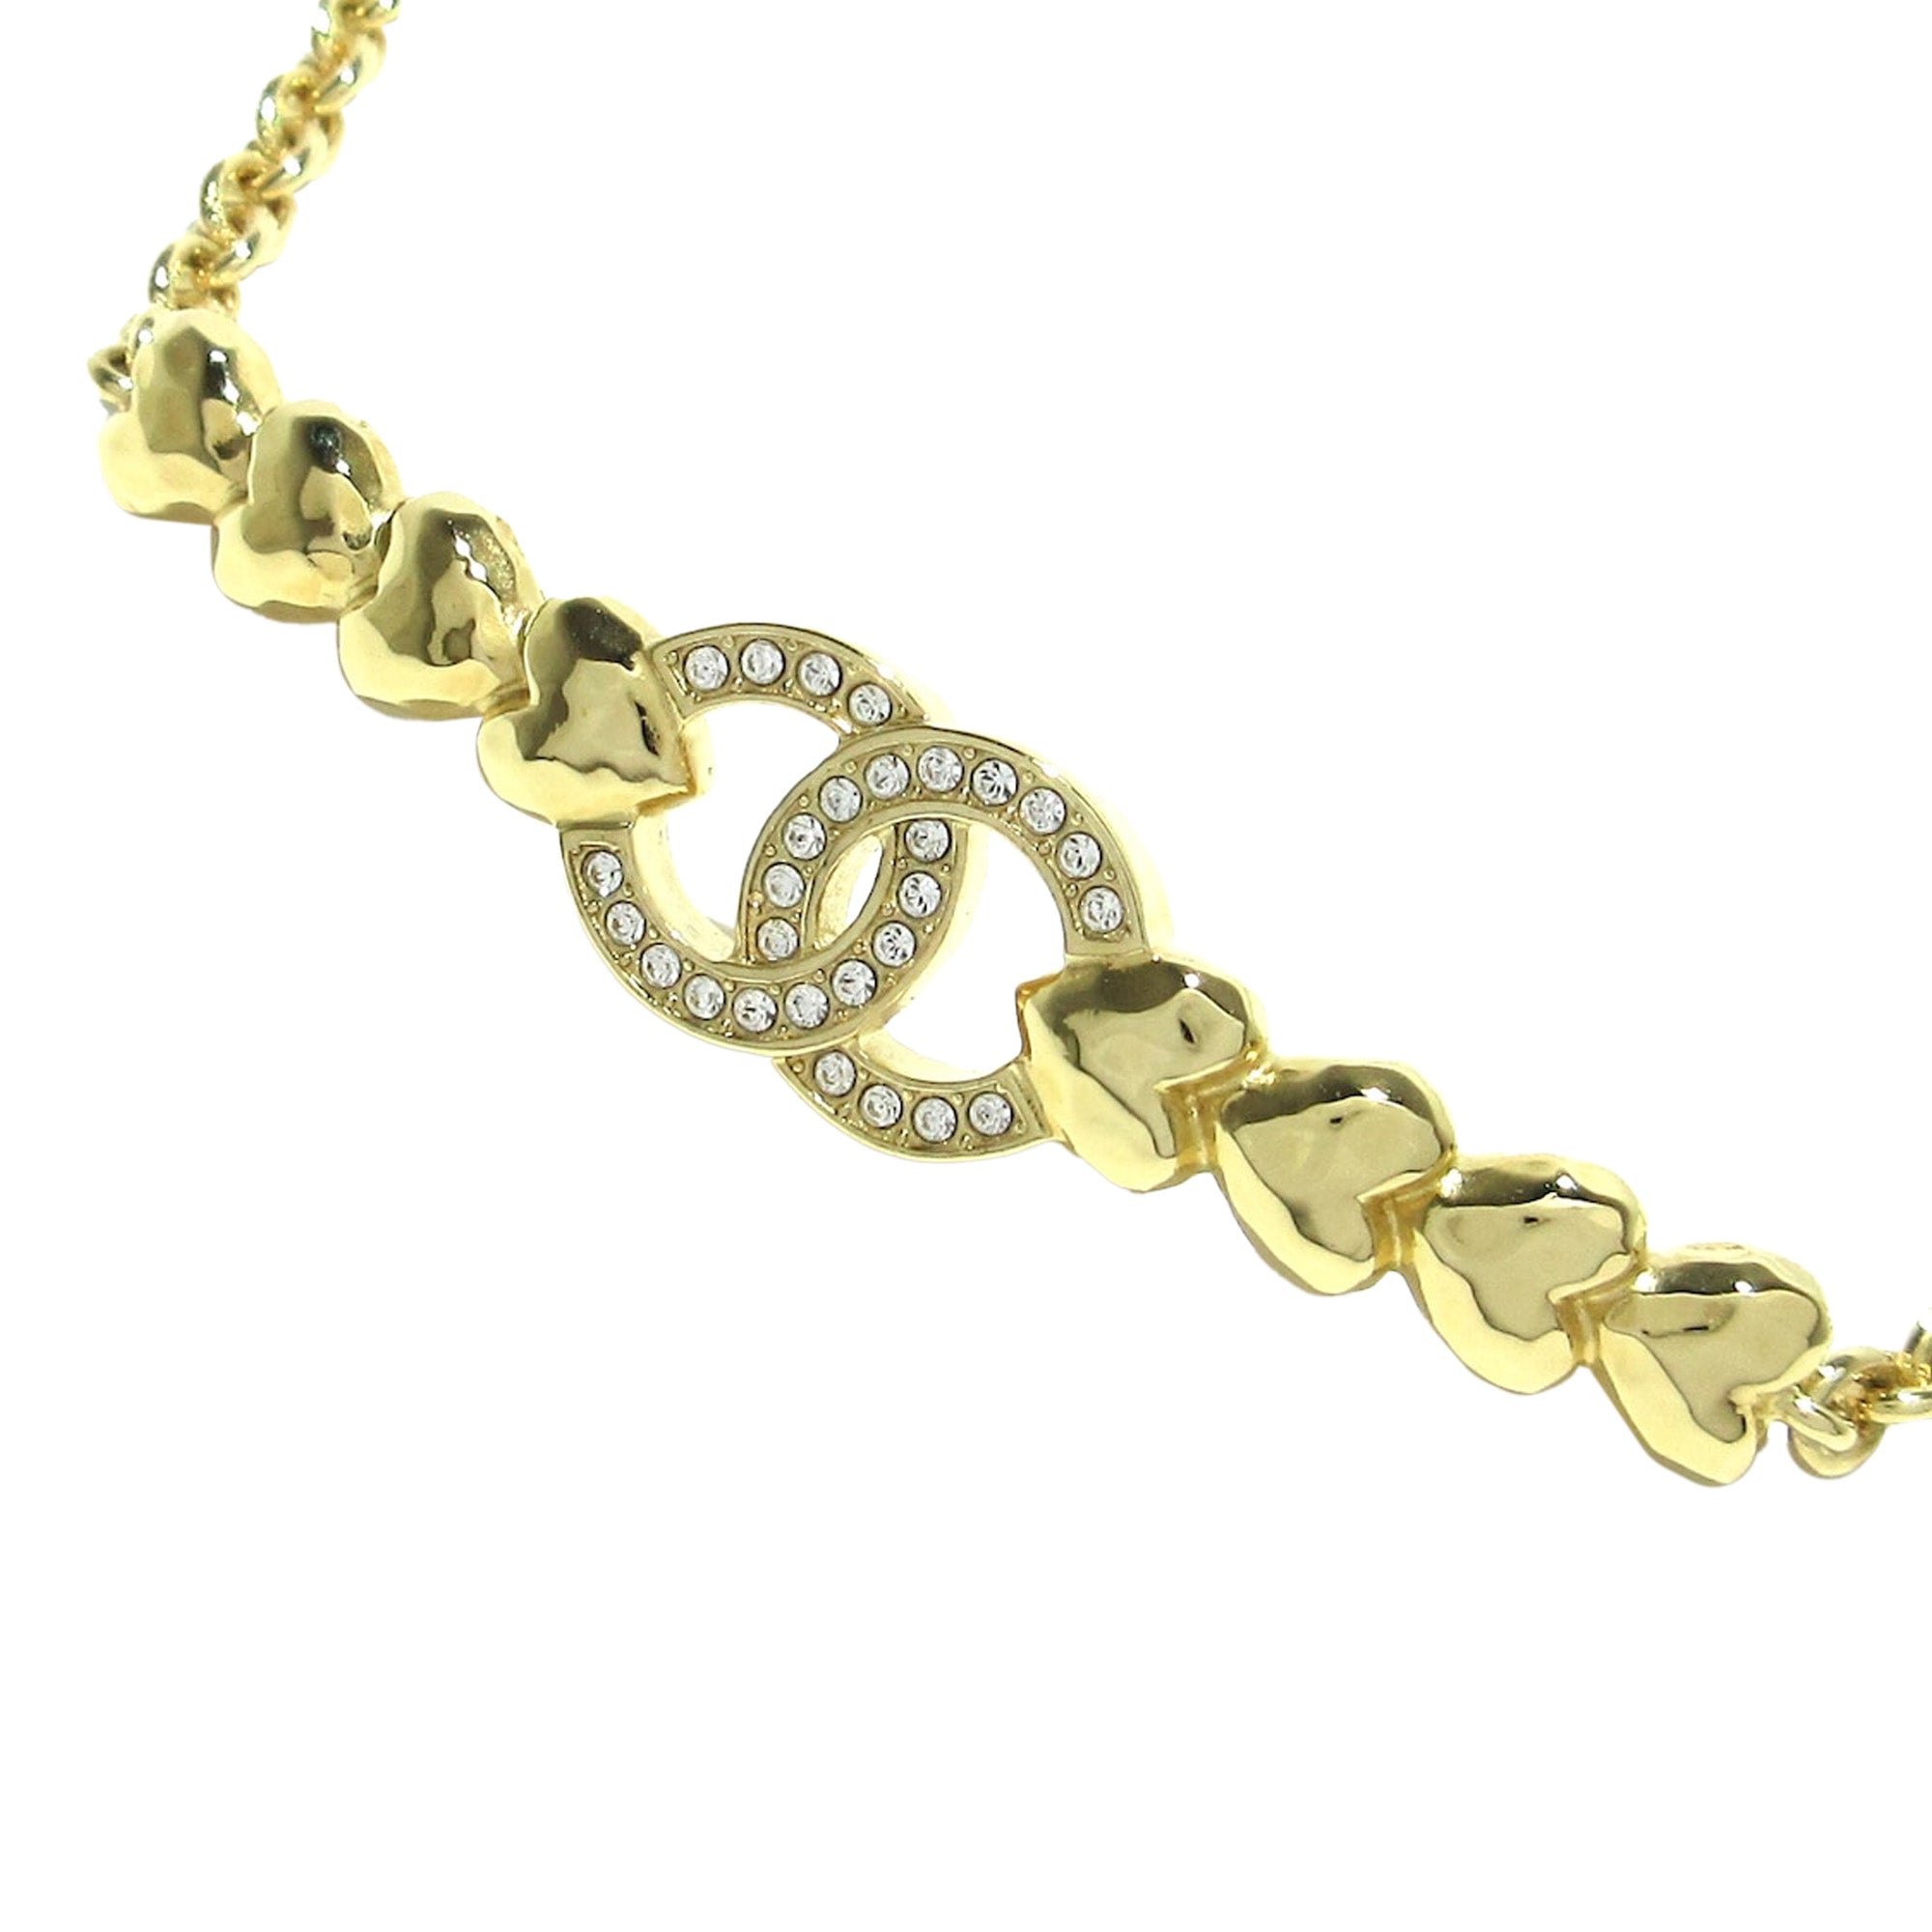 Chanel CC Heart Chain Pendant Necklace